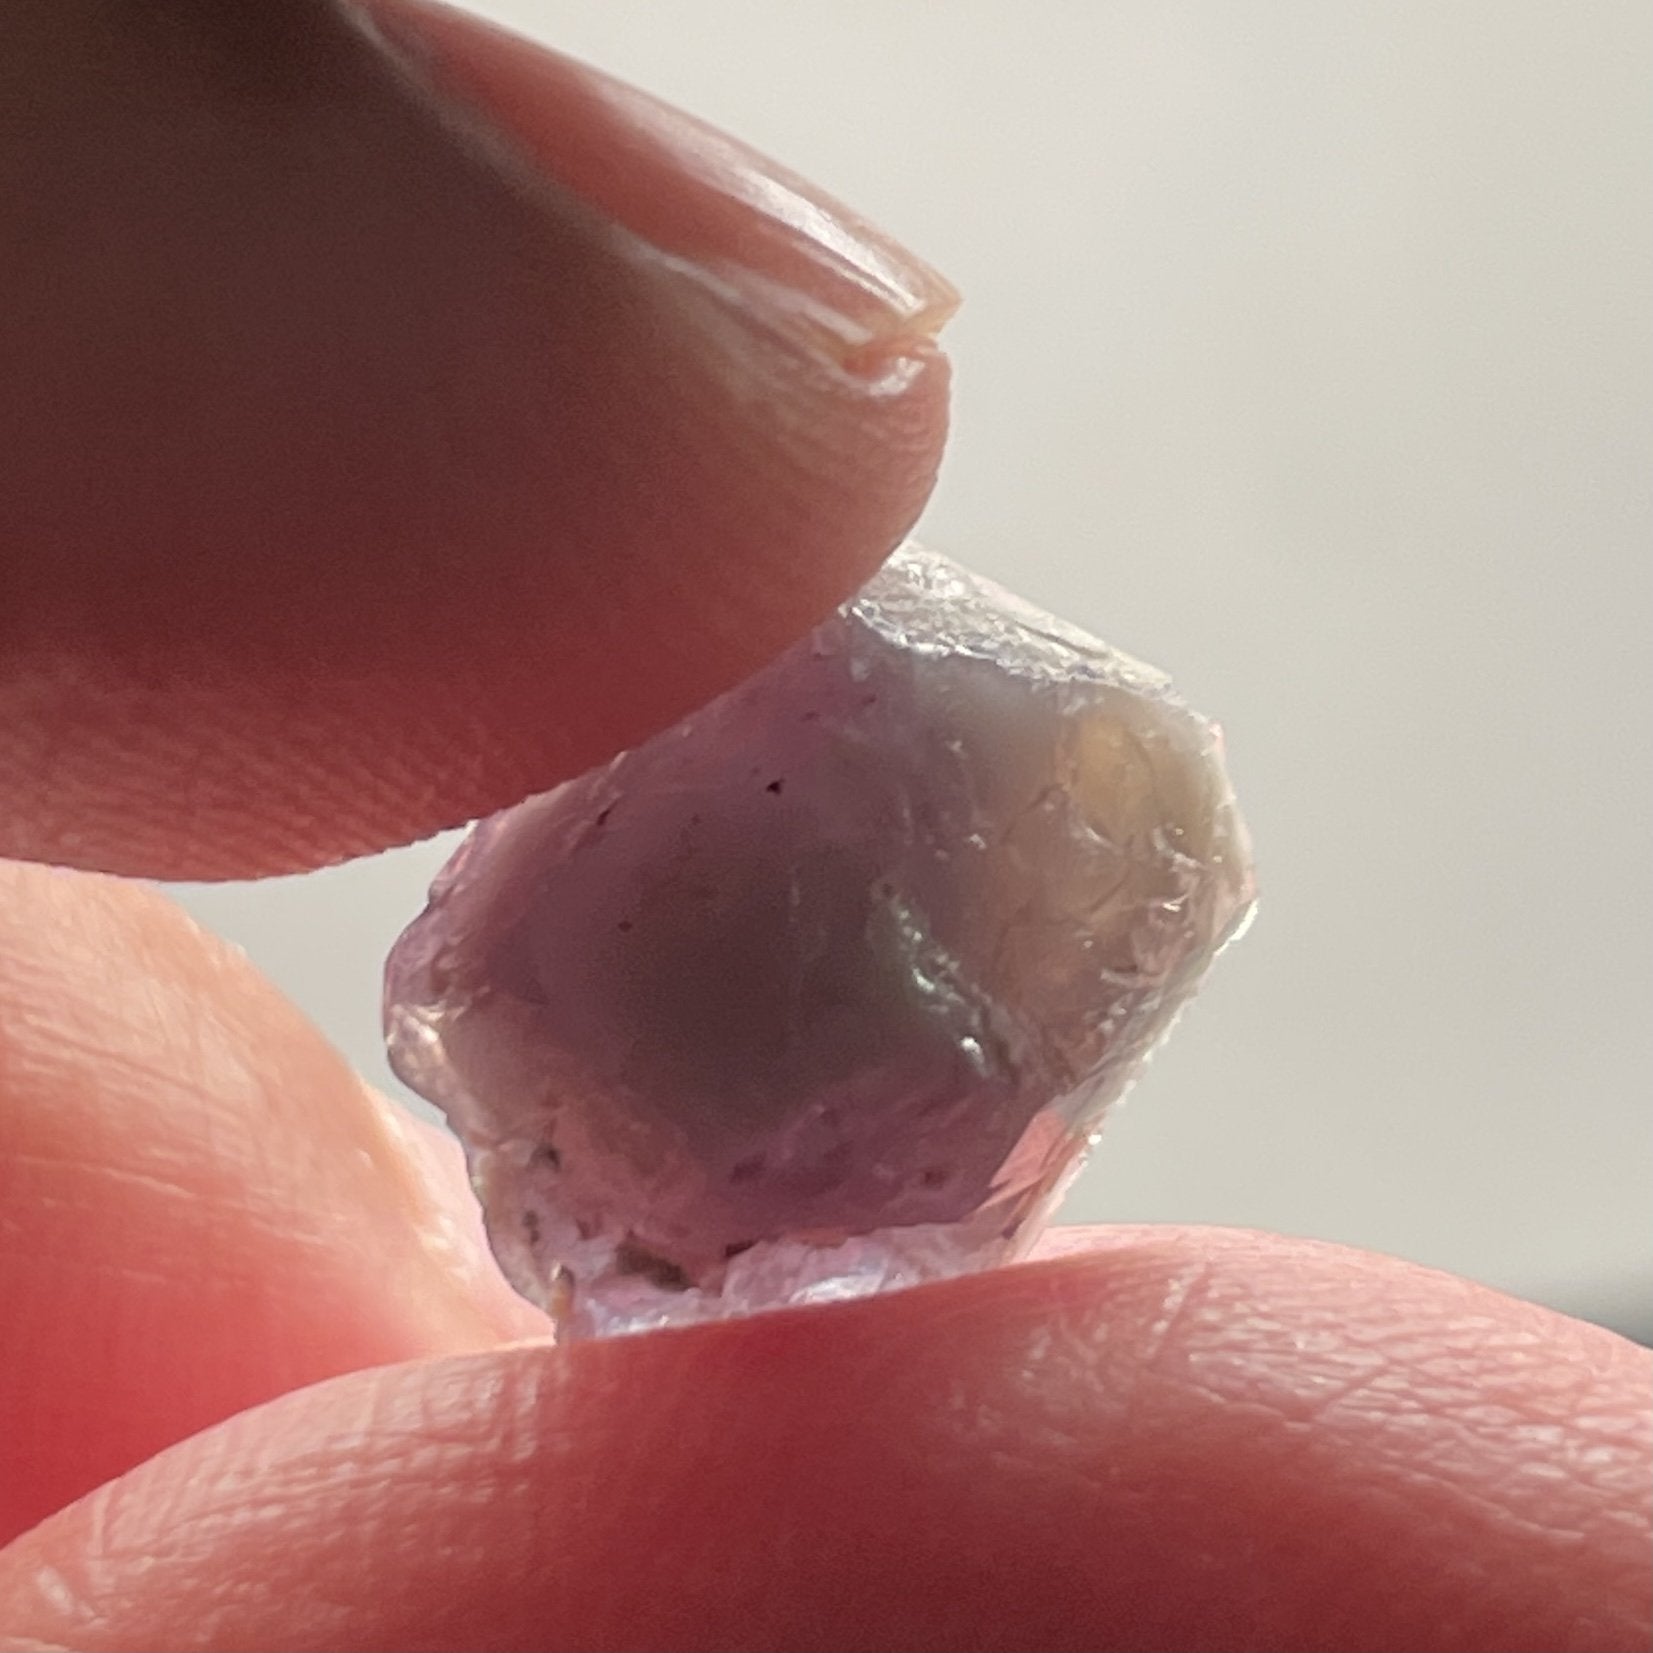 8.29Ct Alexandrite Crystal Tanzania Untreated Unheated. 12.3 X 9.3 6.2Mm